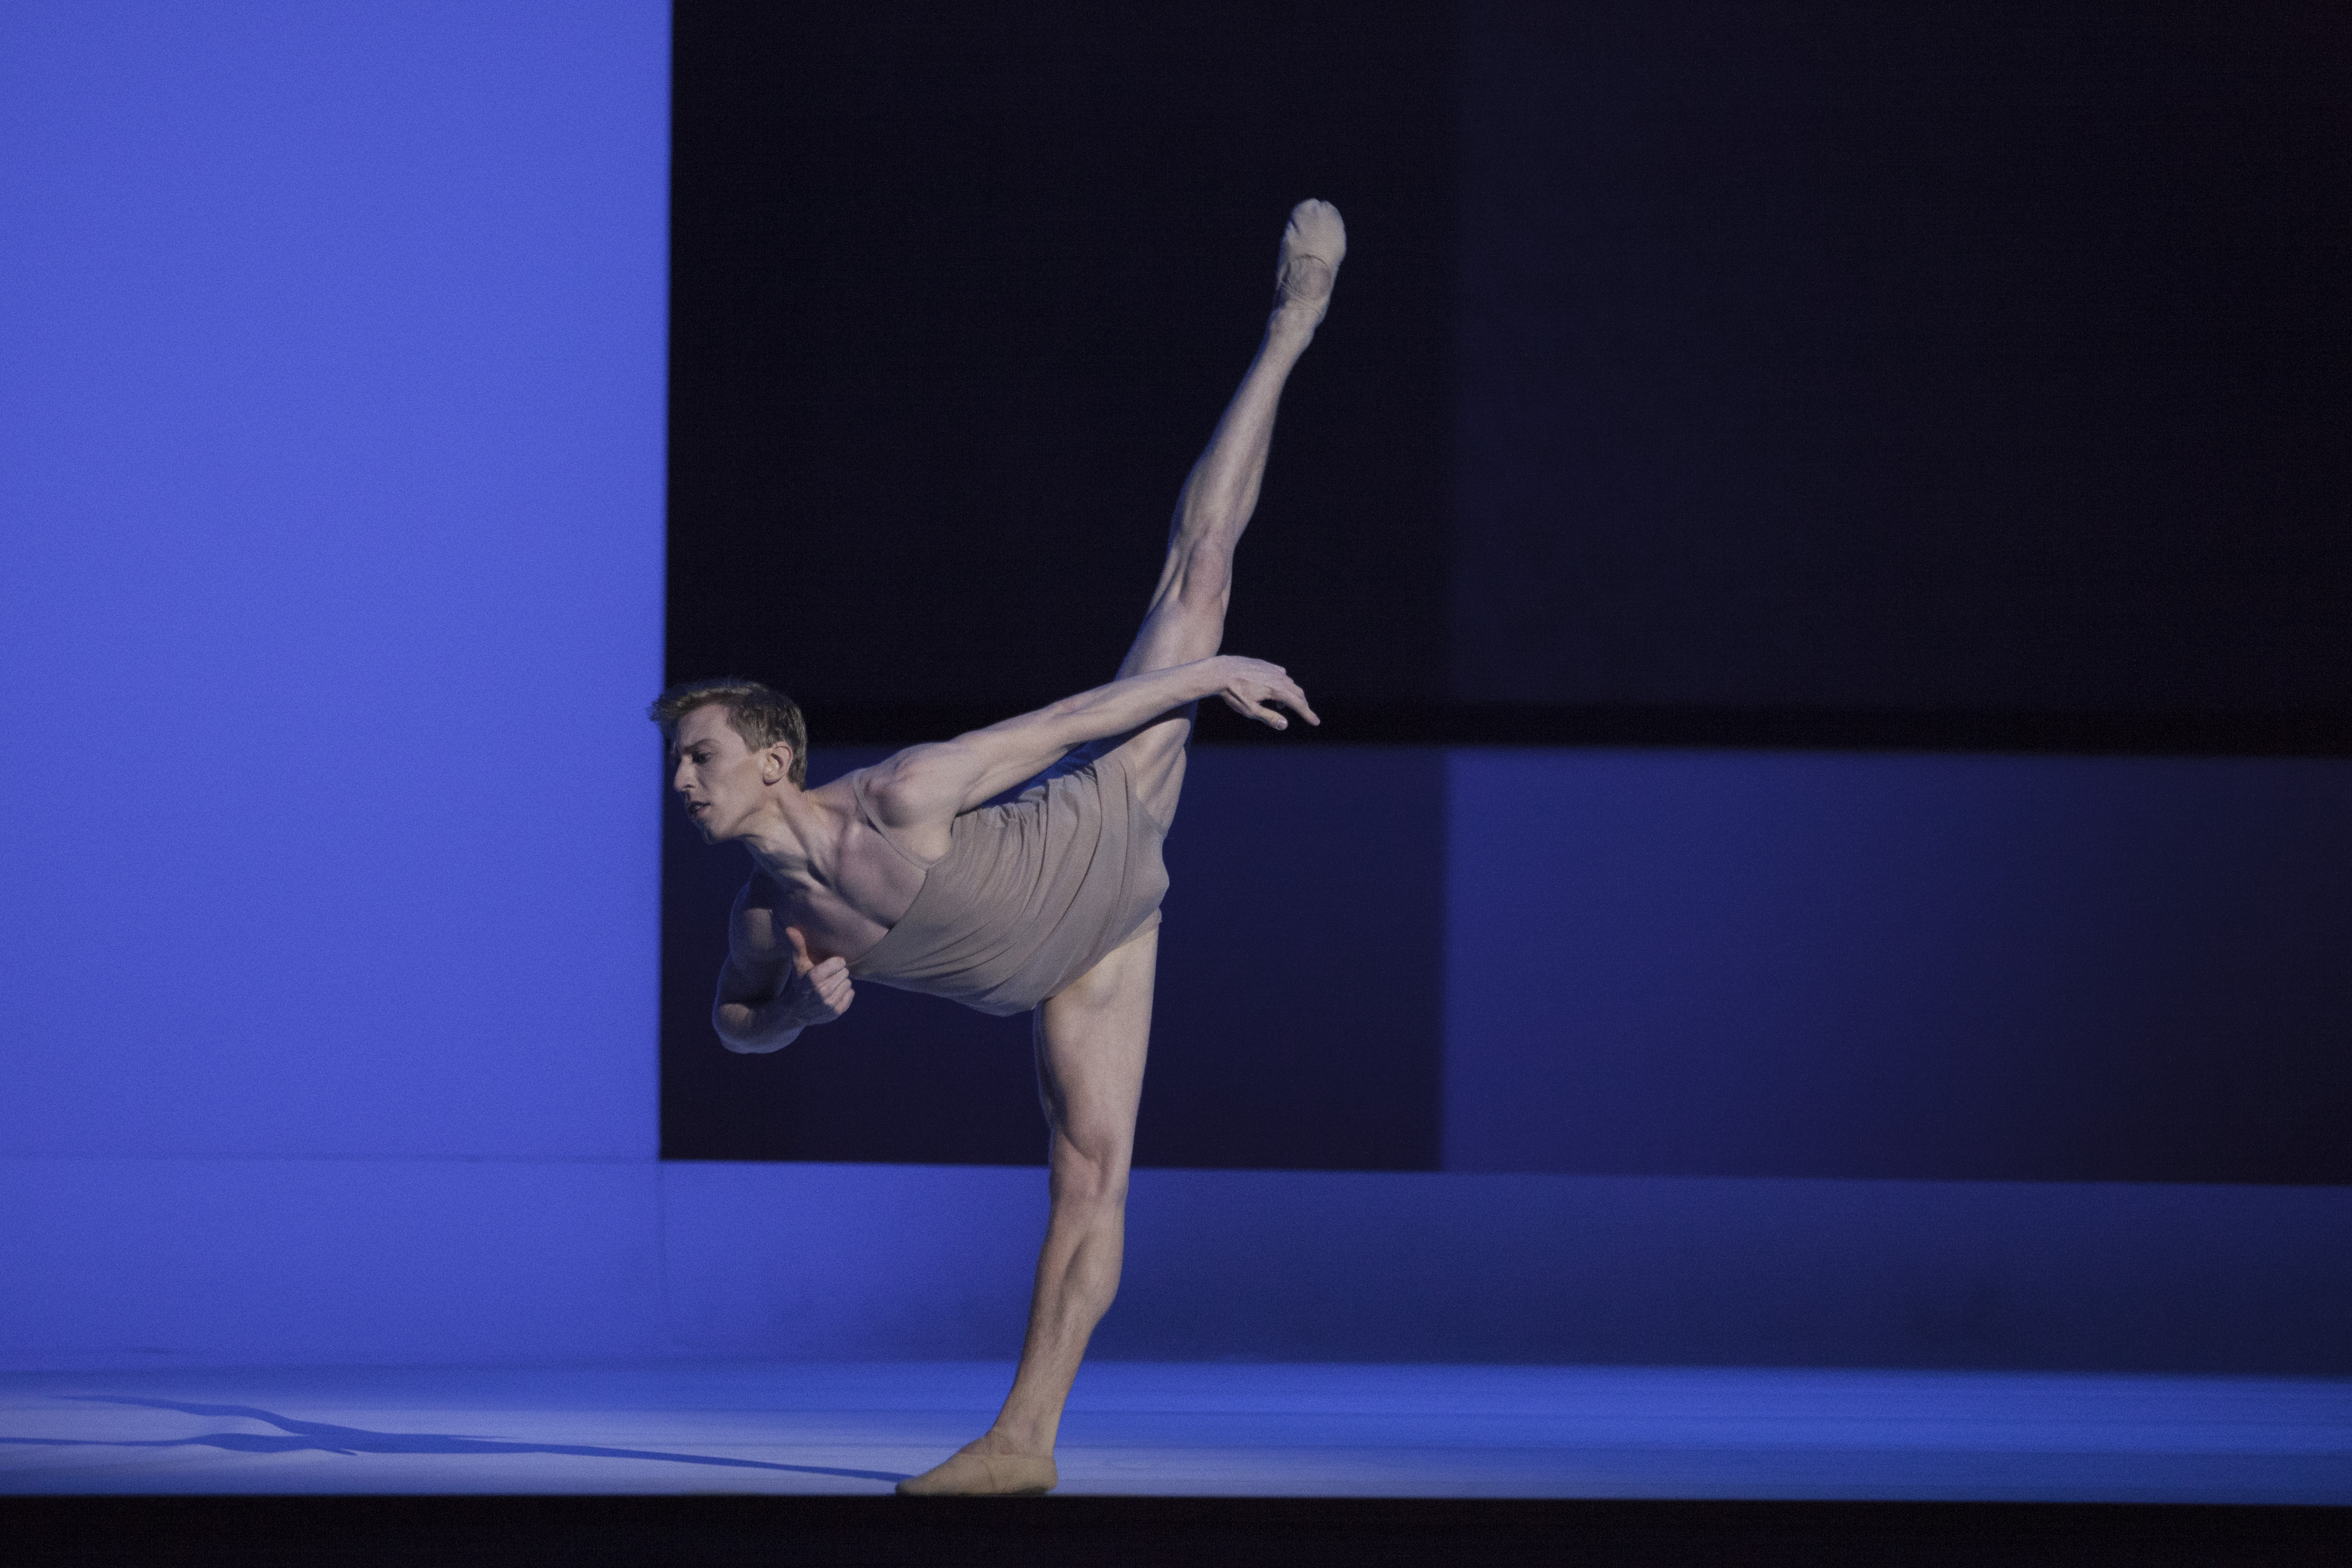 Dancer in a nude leotard extending left leg upwards to the back